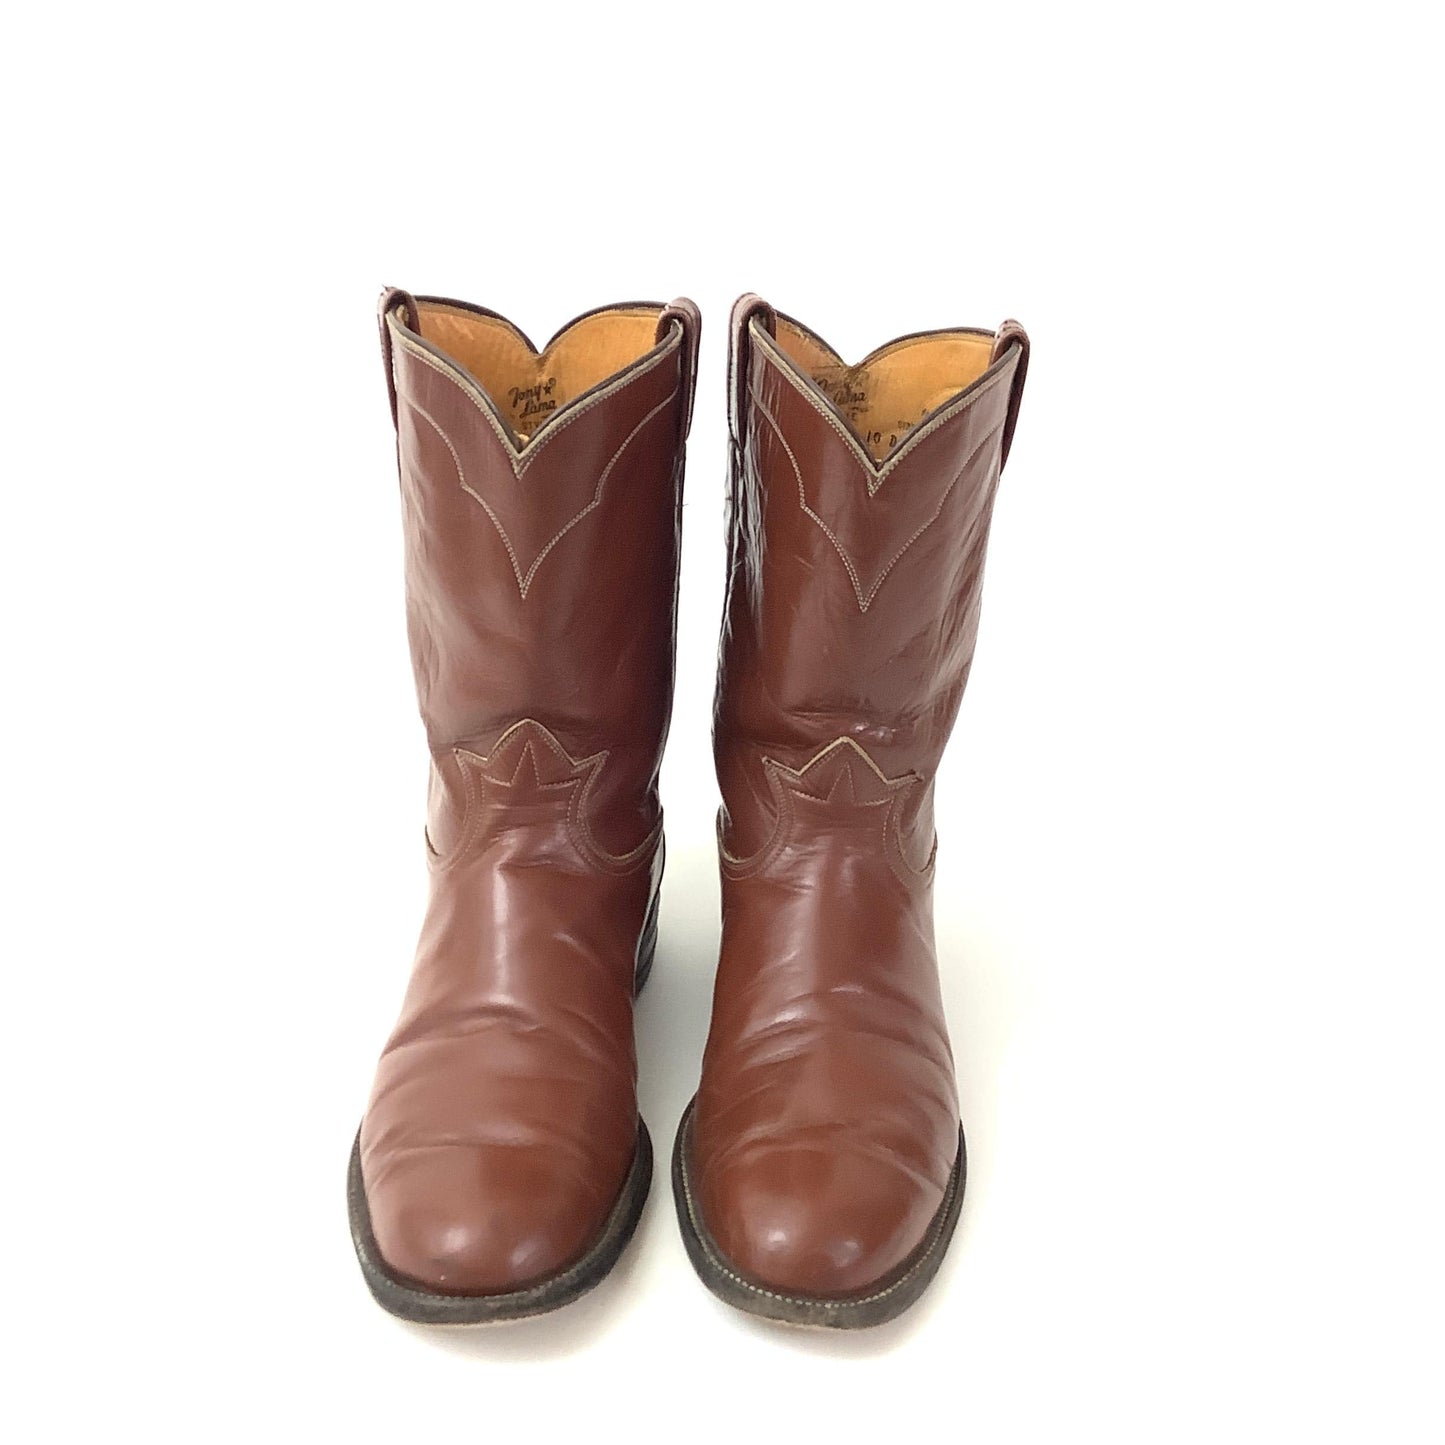 Tony Lama Western Boots 10.5 D